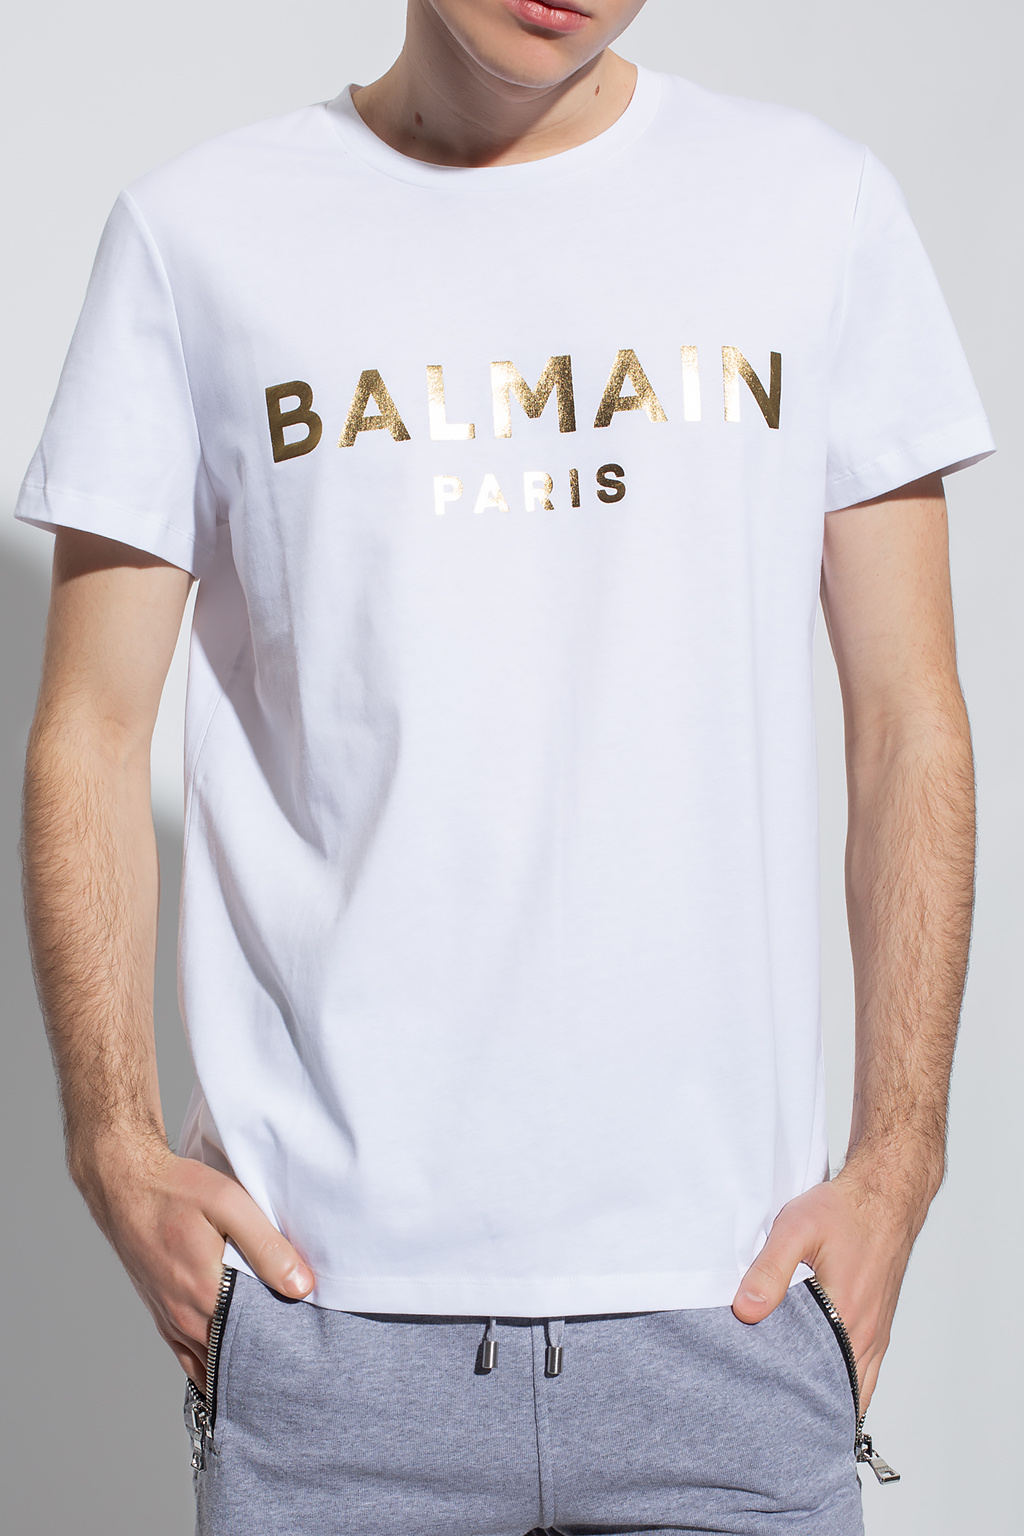 Balmain Logo T-shirt | Men's Clothing ...